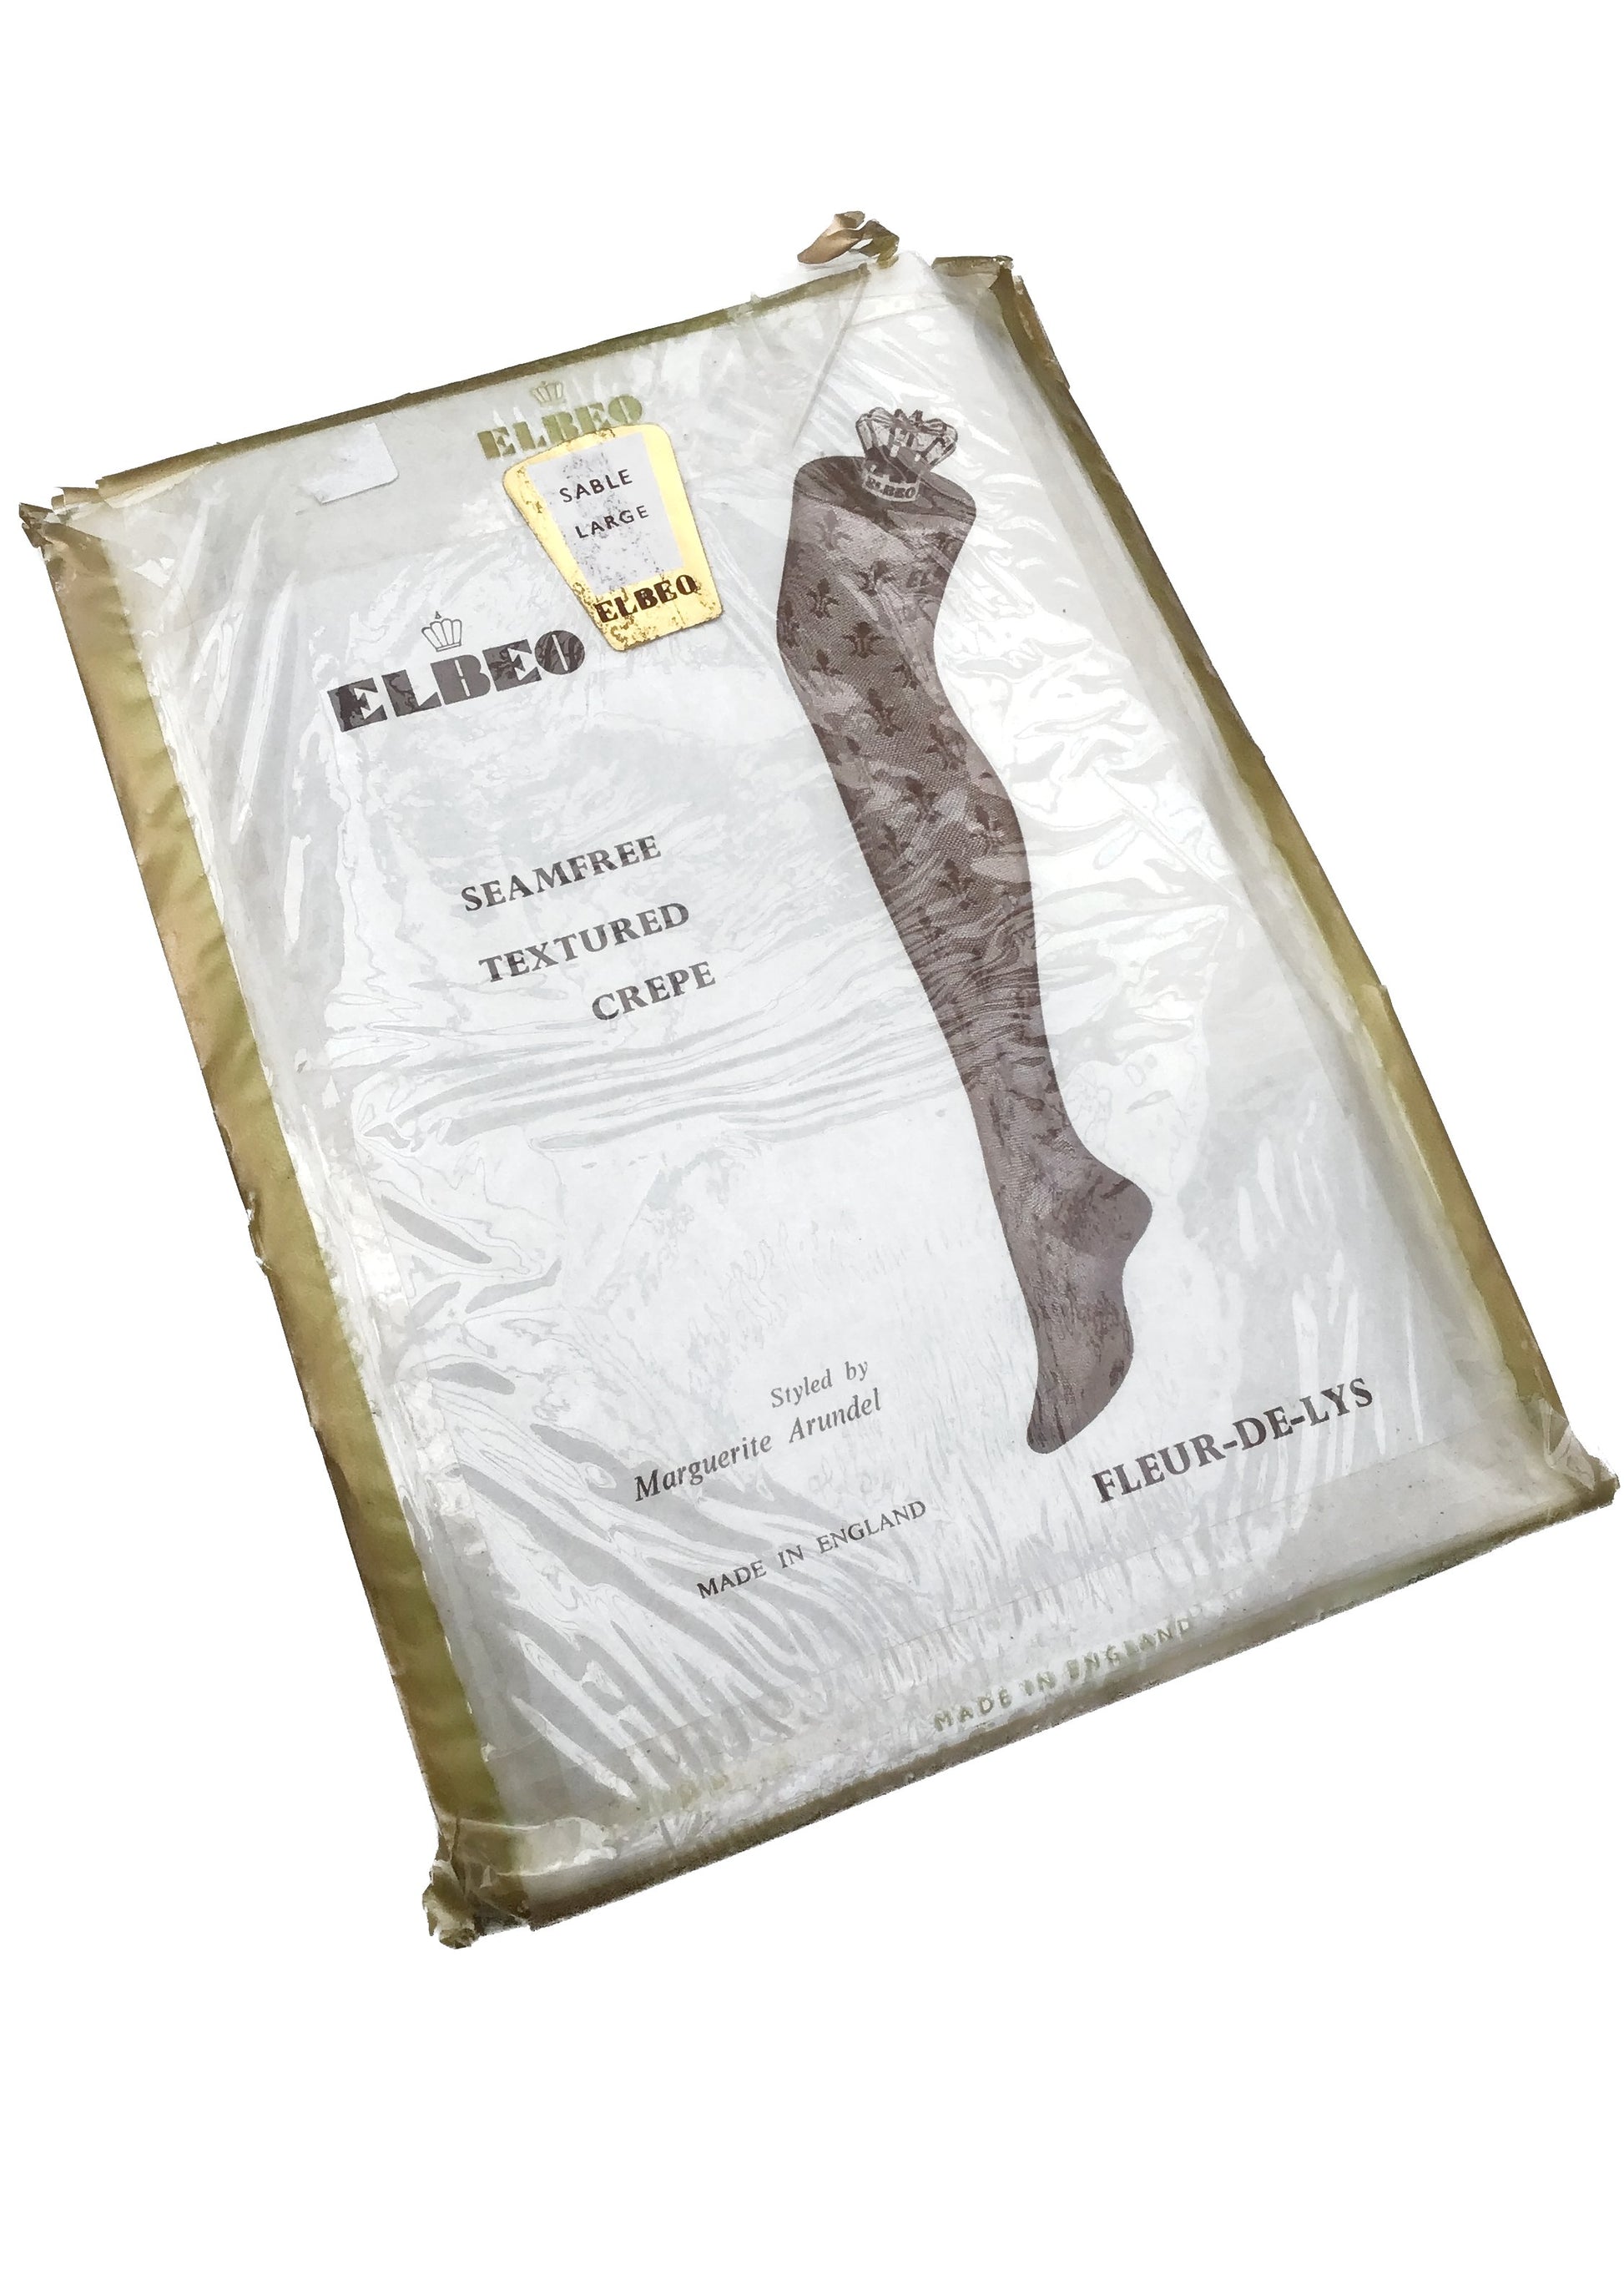 vintage elbeo seam free stockings in a textured fleur de lys lace pattern, sable colour, deadstock packaging unworn